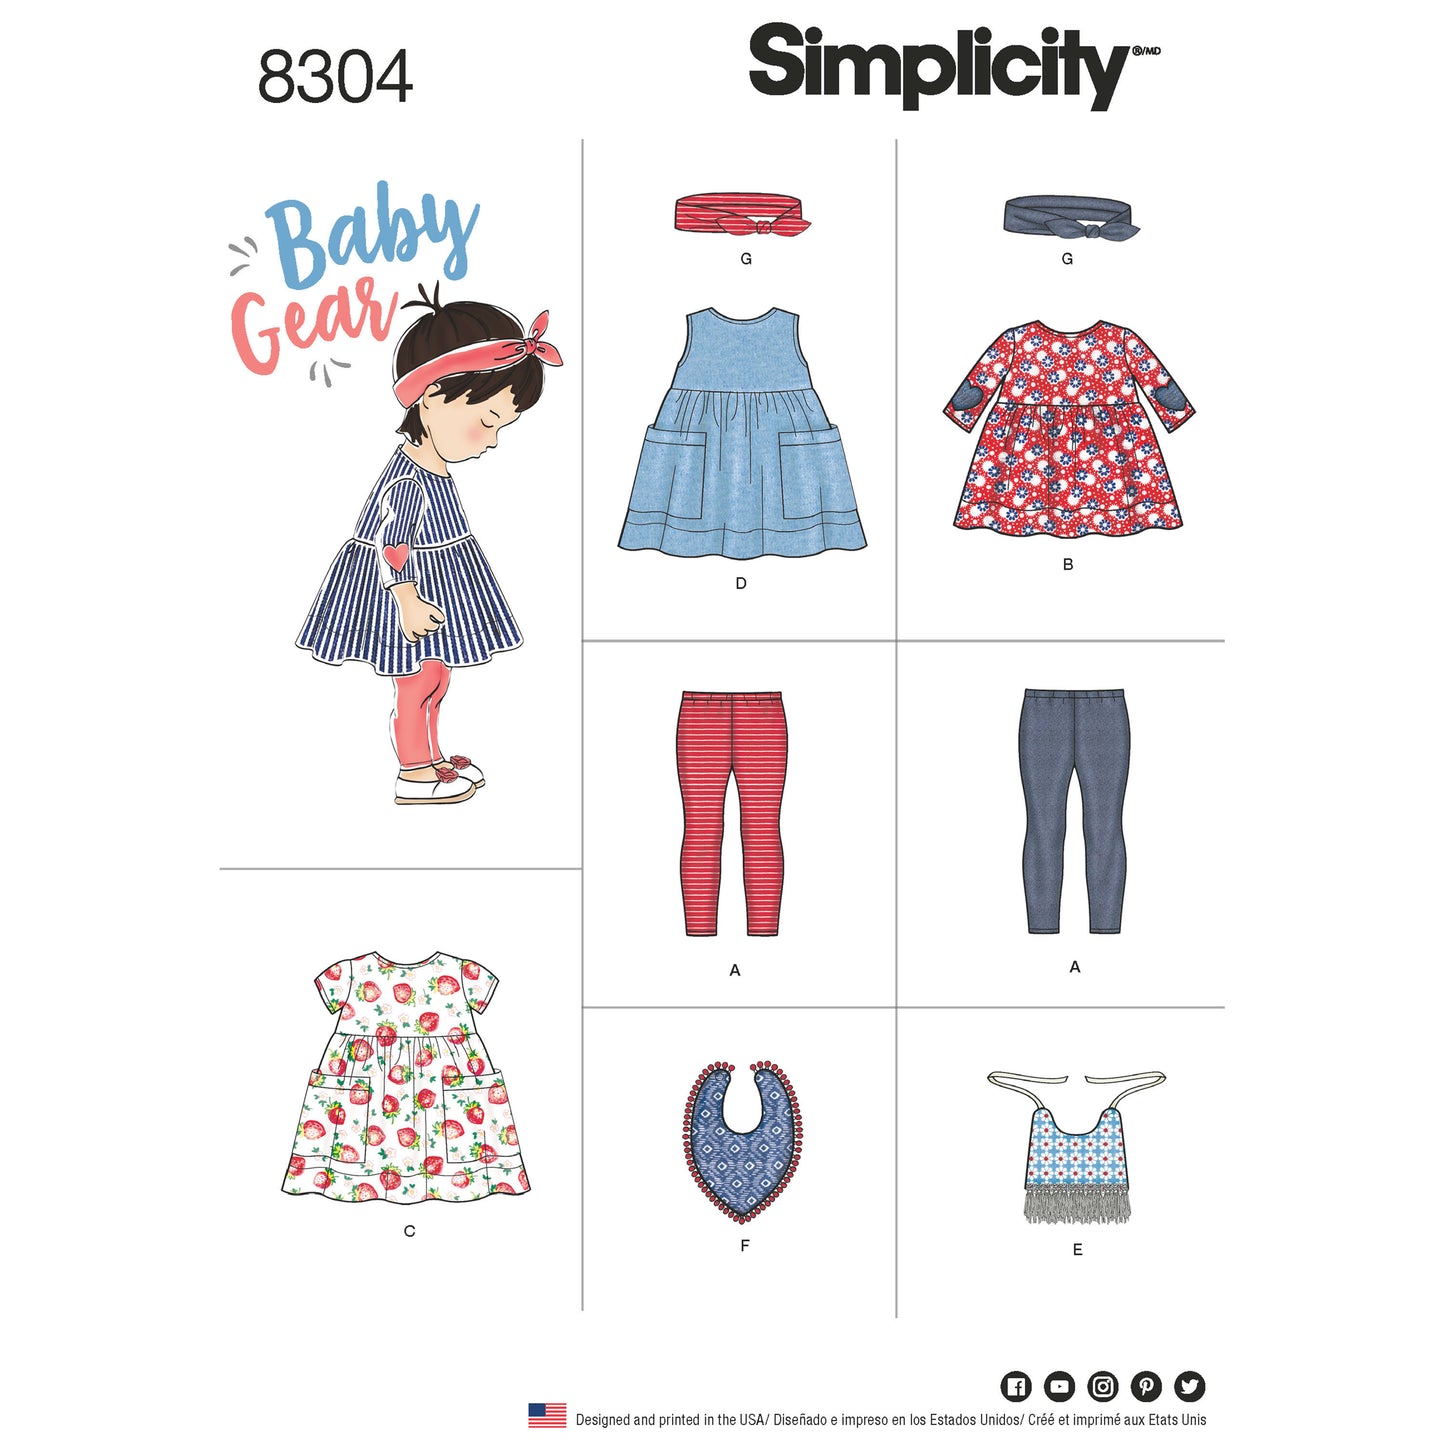 Simplicity 8304